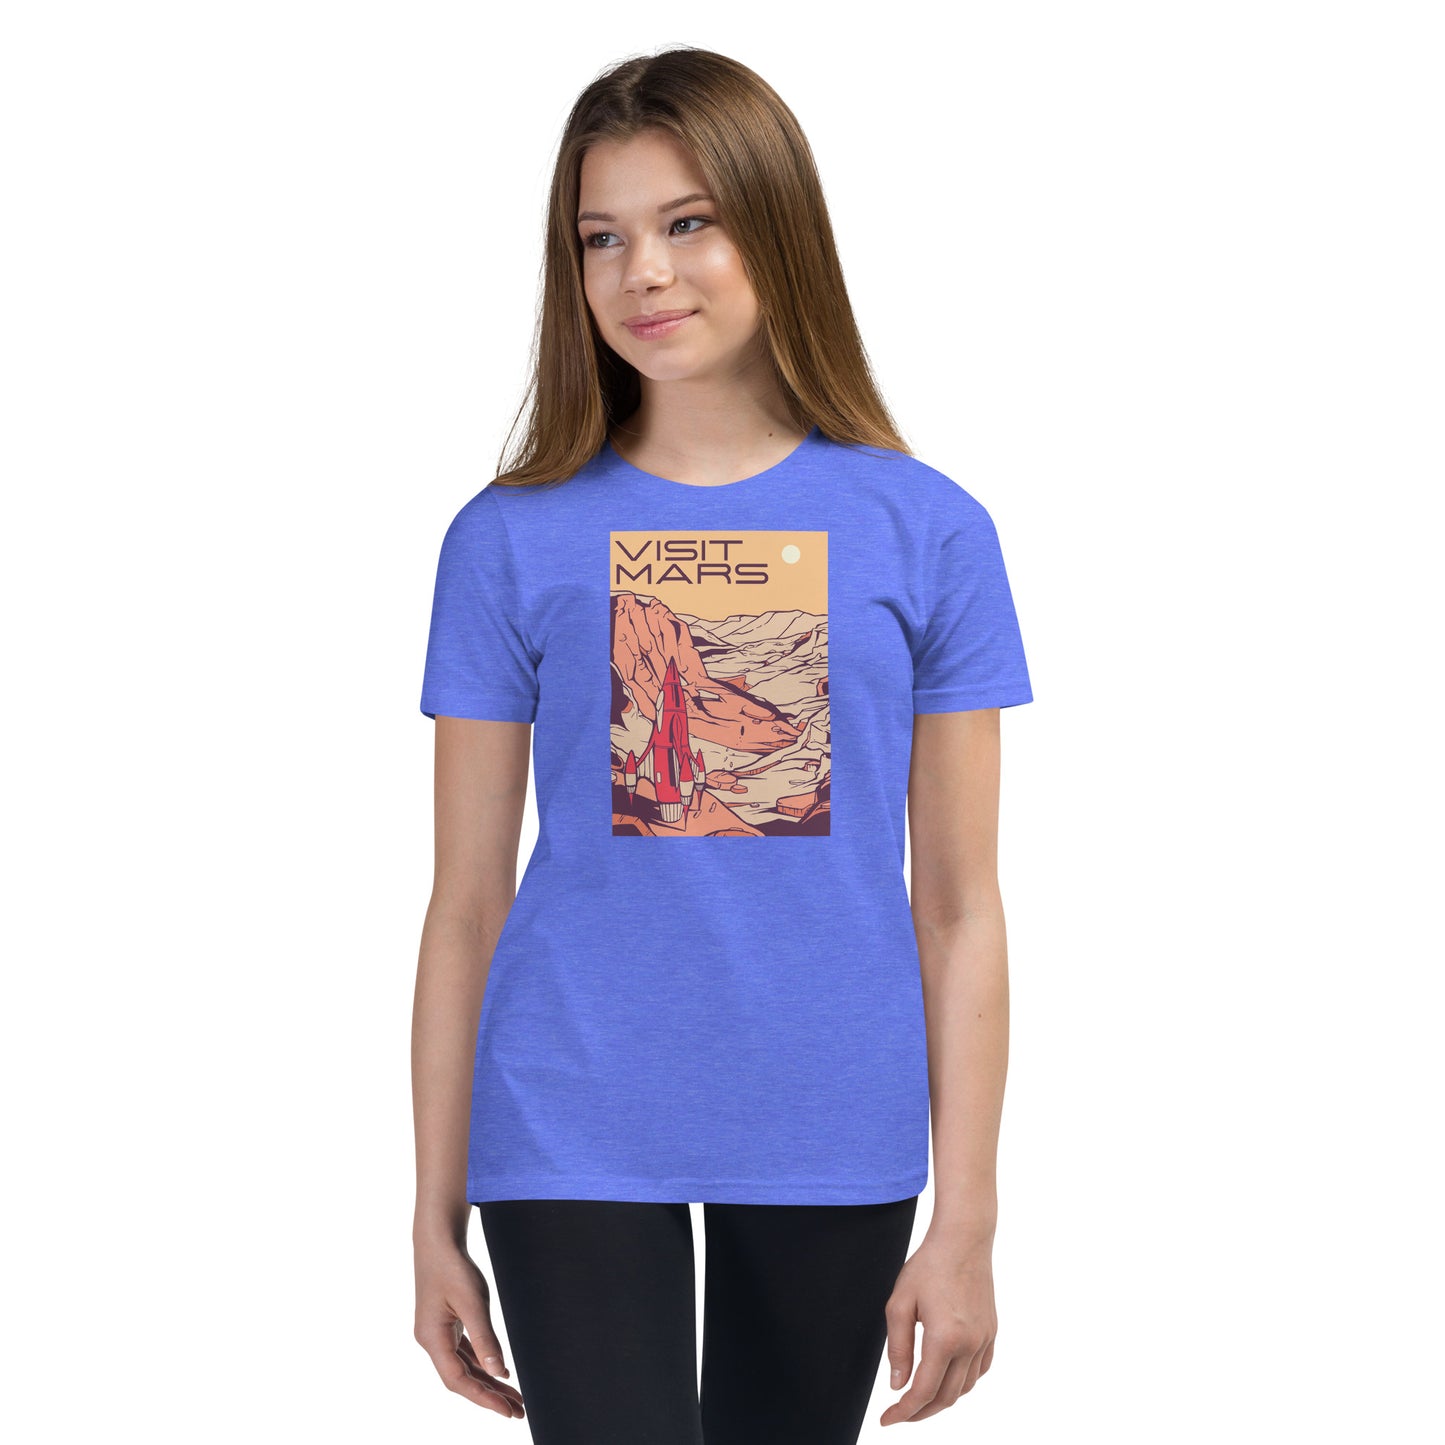 Visit Mars Youth Short Sleeve T-Shirt